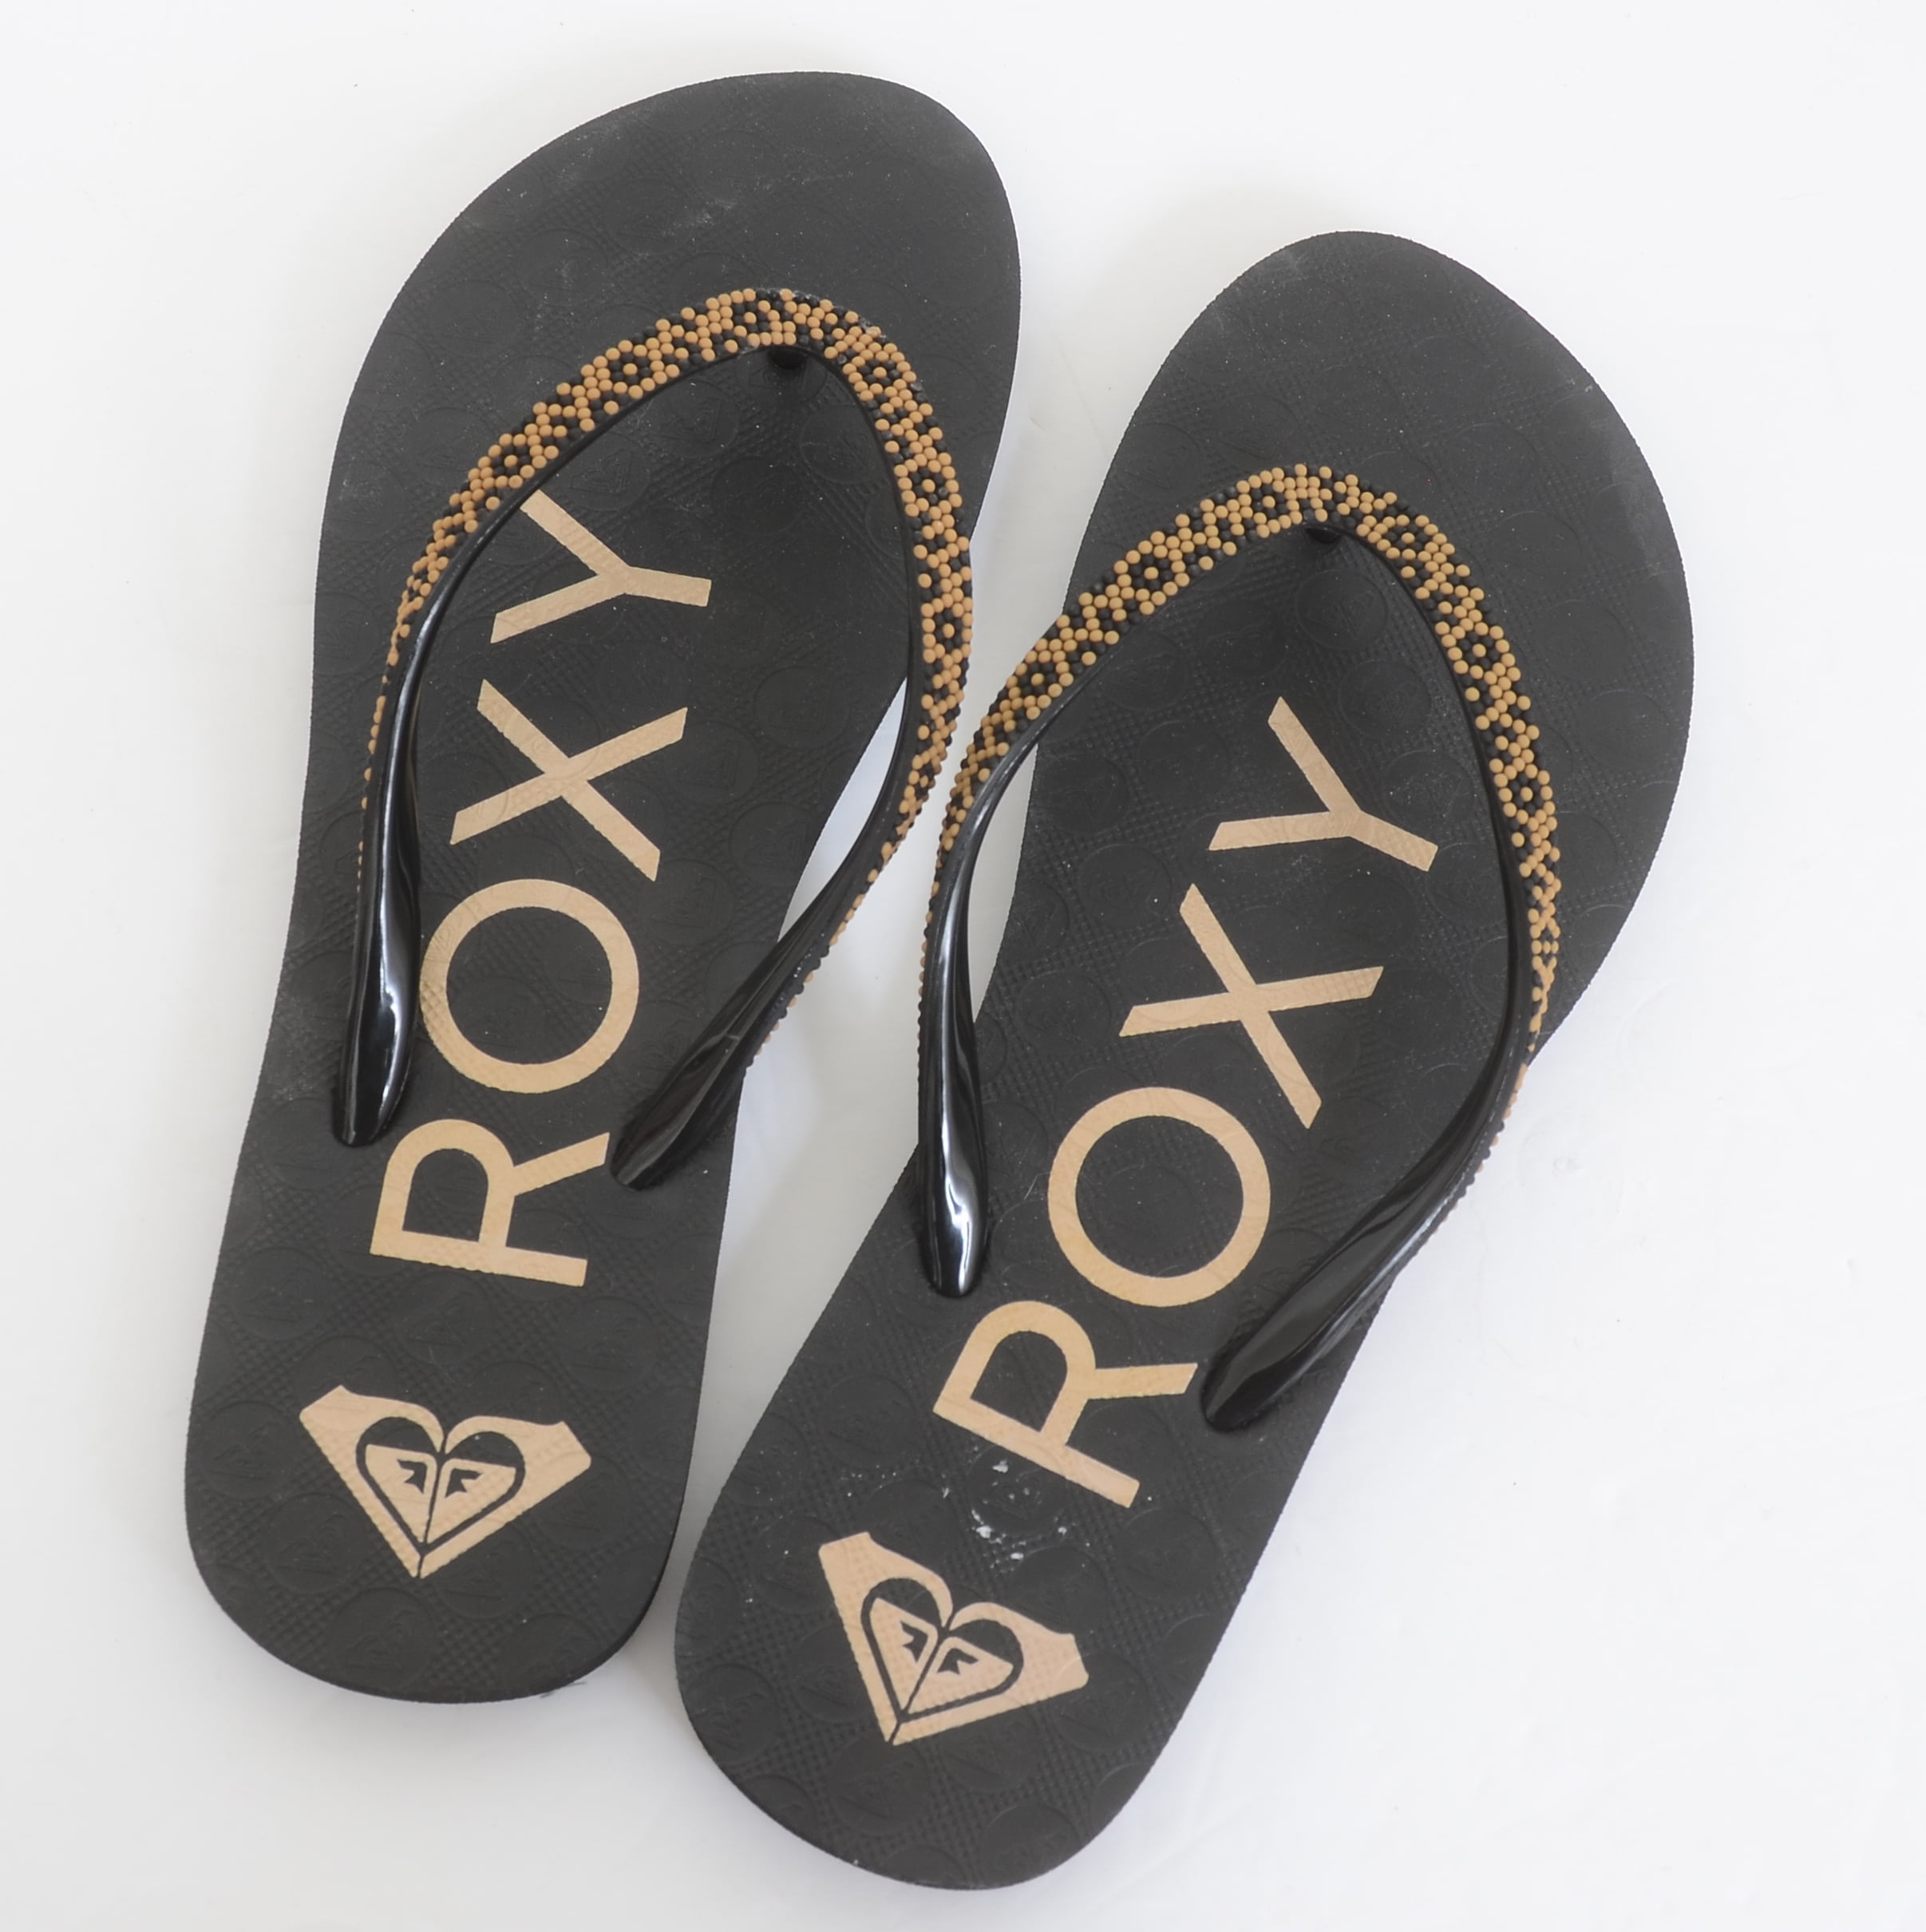 Roxy Girls Flip Flops Sandy Fashion Kids Casual Slippers Slides ARGL100286-BLK 